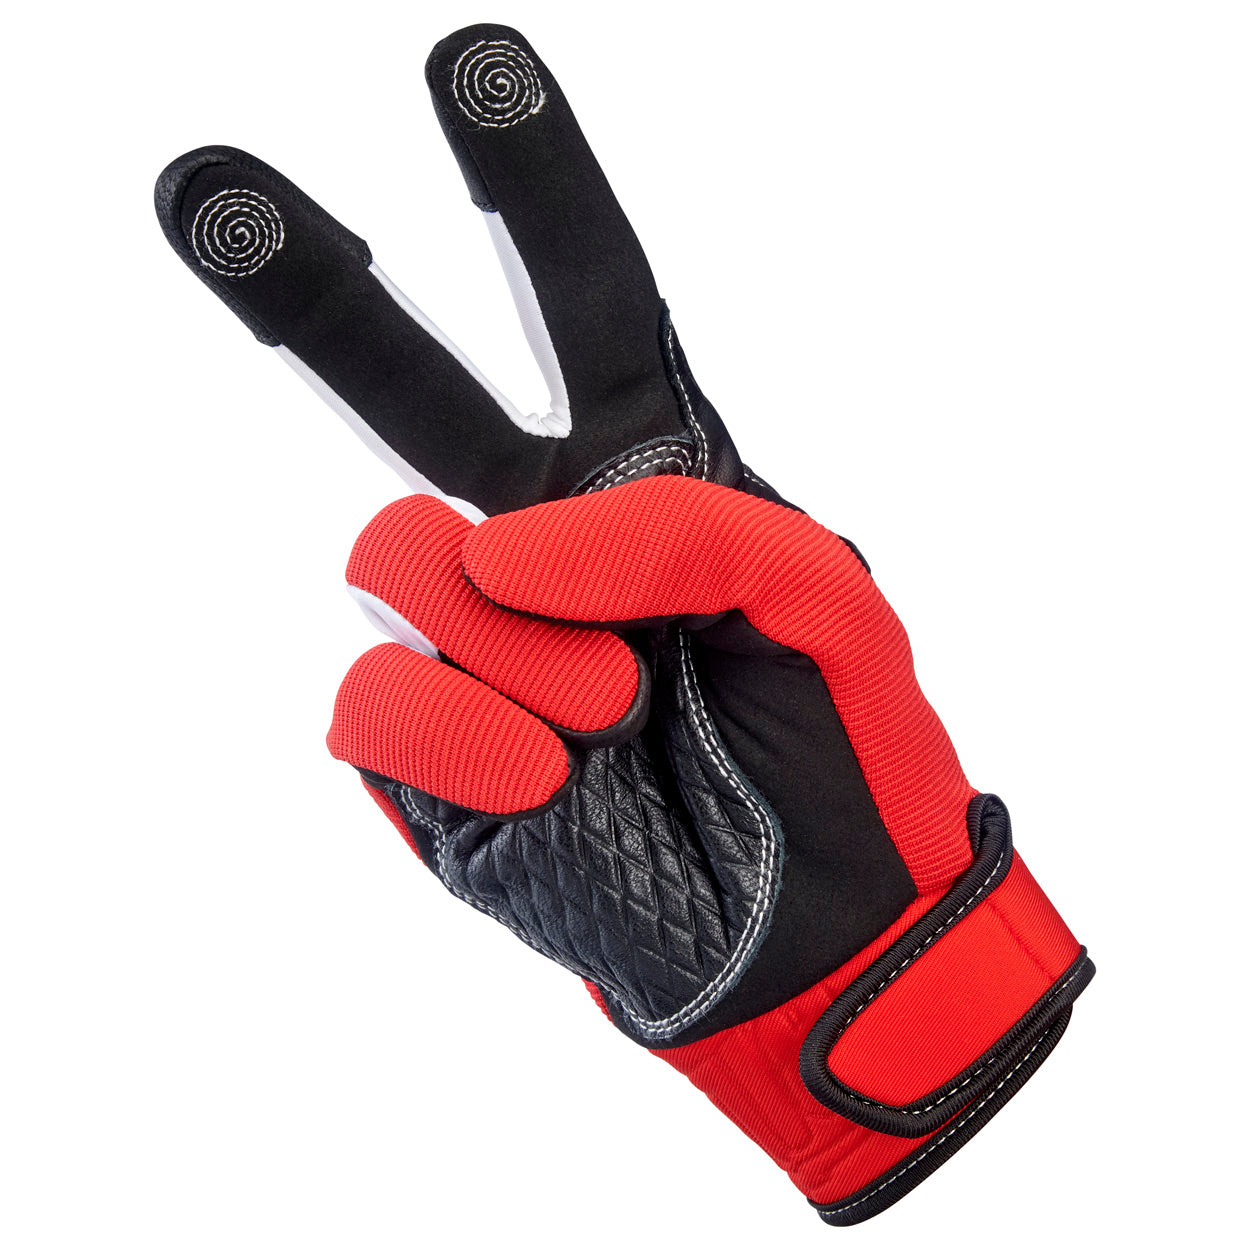 Baja Gloves - Red